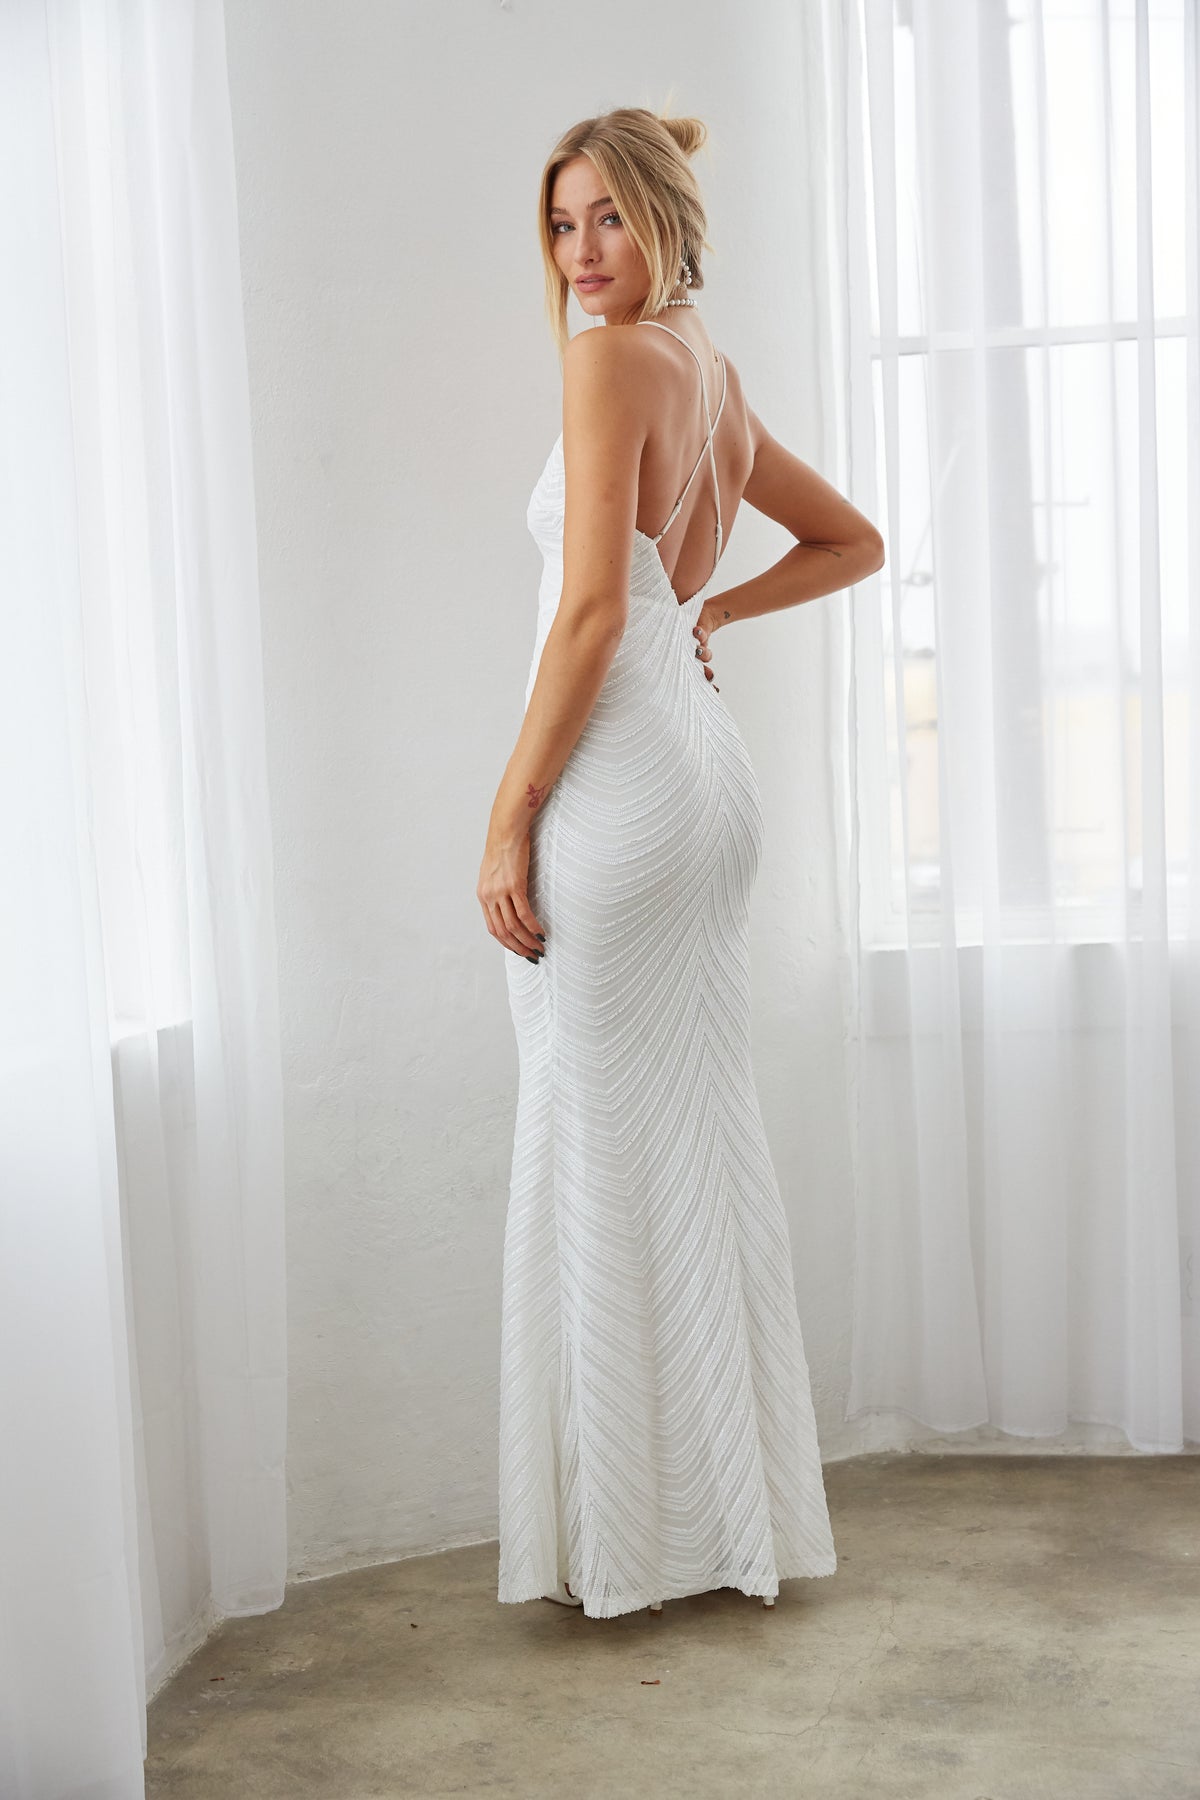 long white sequin dress - mermaid style maxi dress - wedding reception dress - thin strap v neck dress - bridal outfit inspo